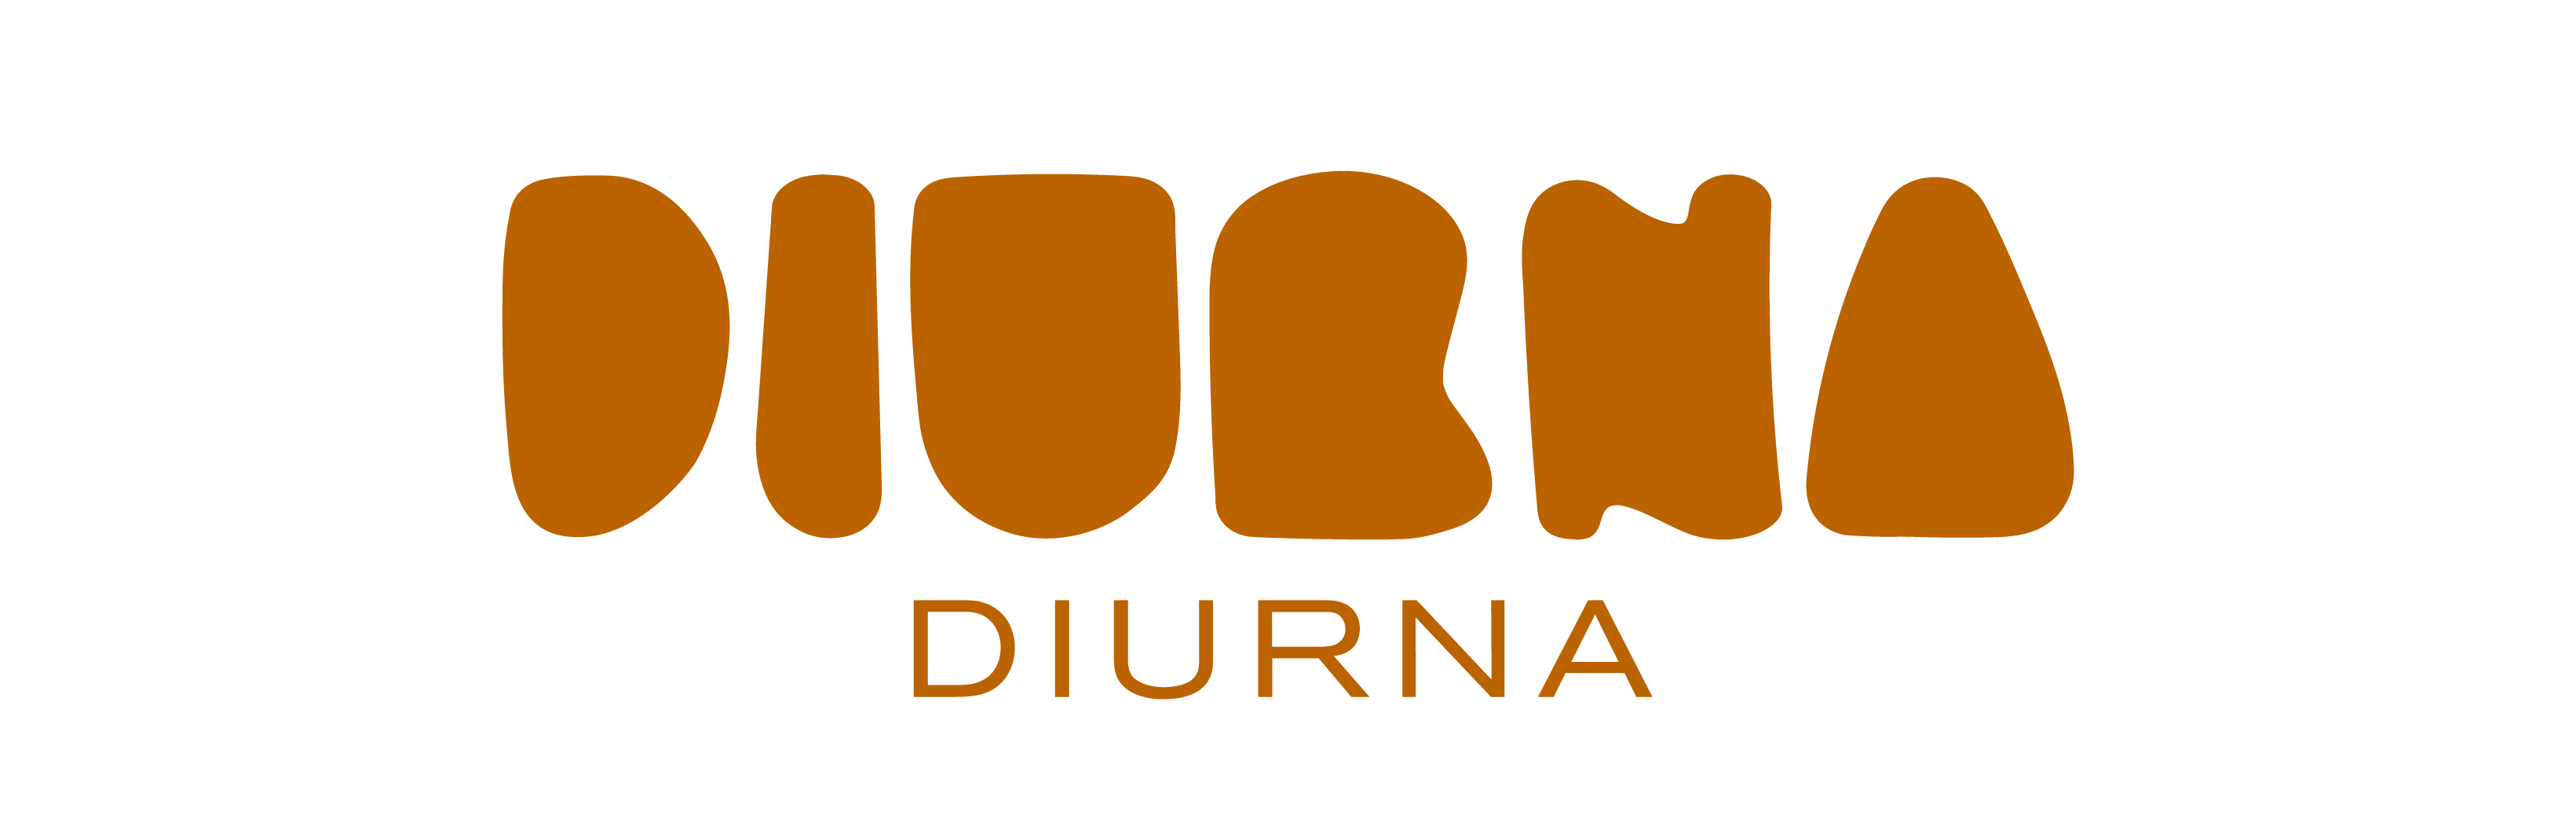 Diurna Metal Jewelry Logo